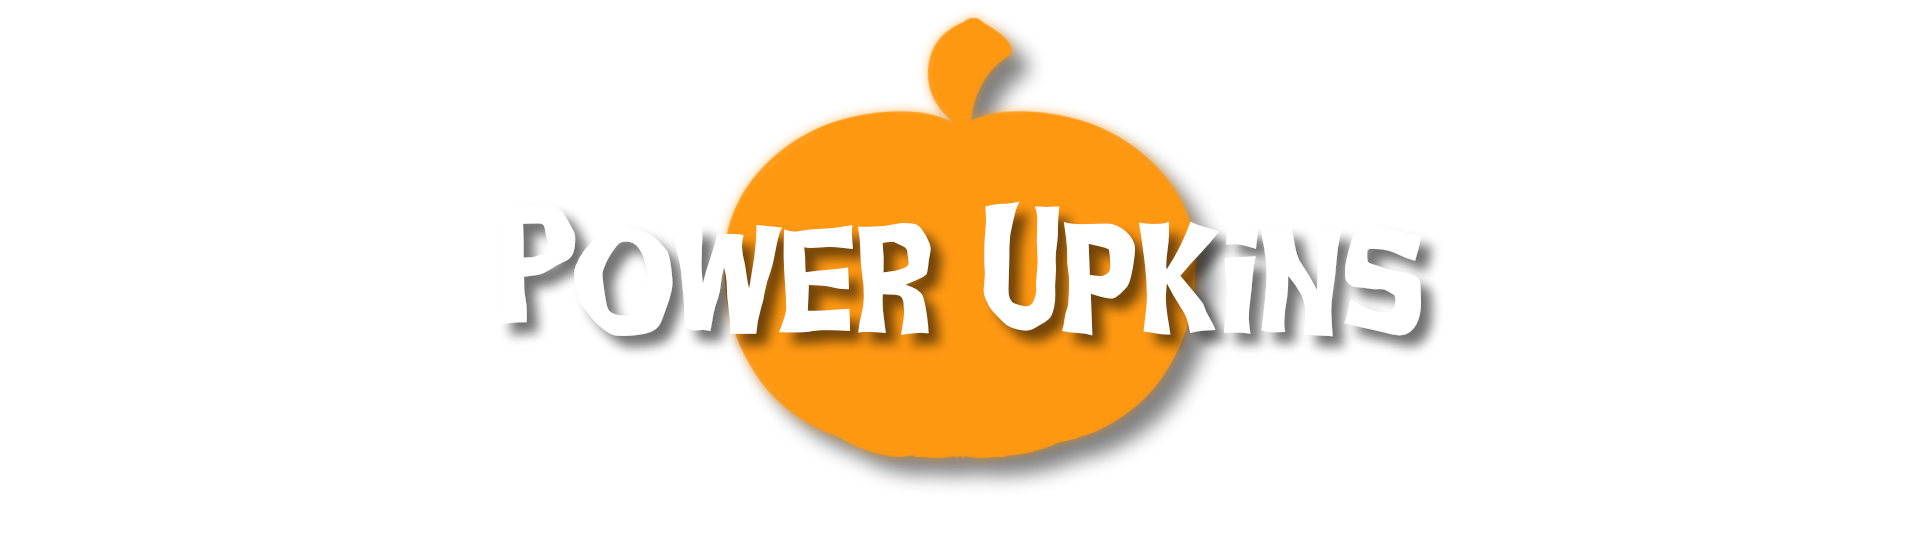 Power Upkins